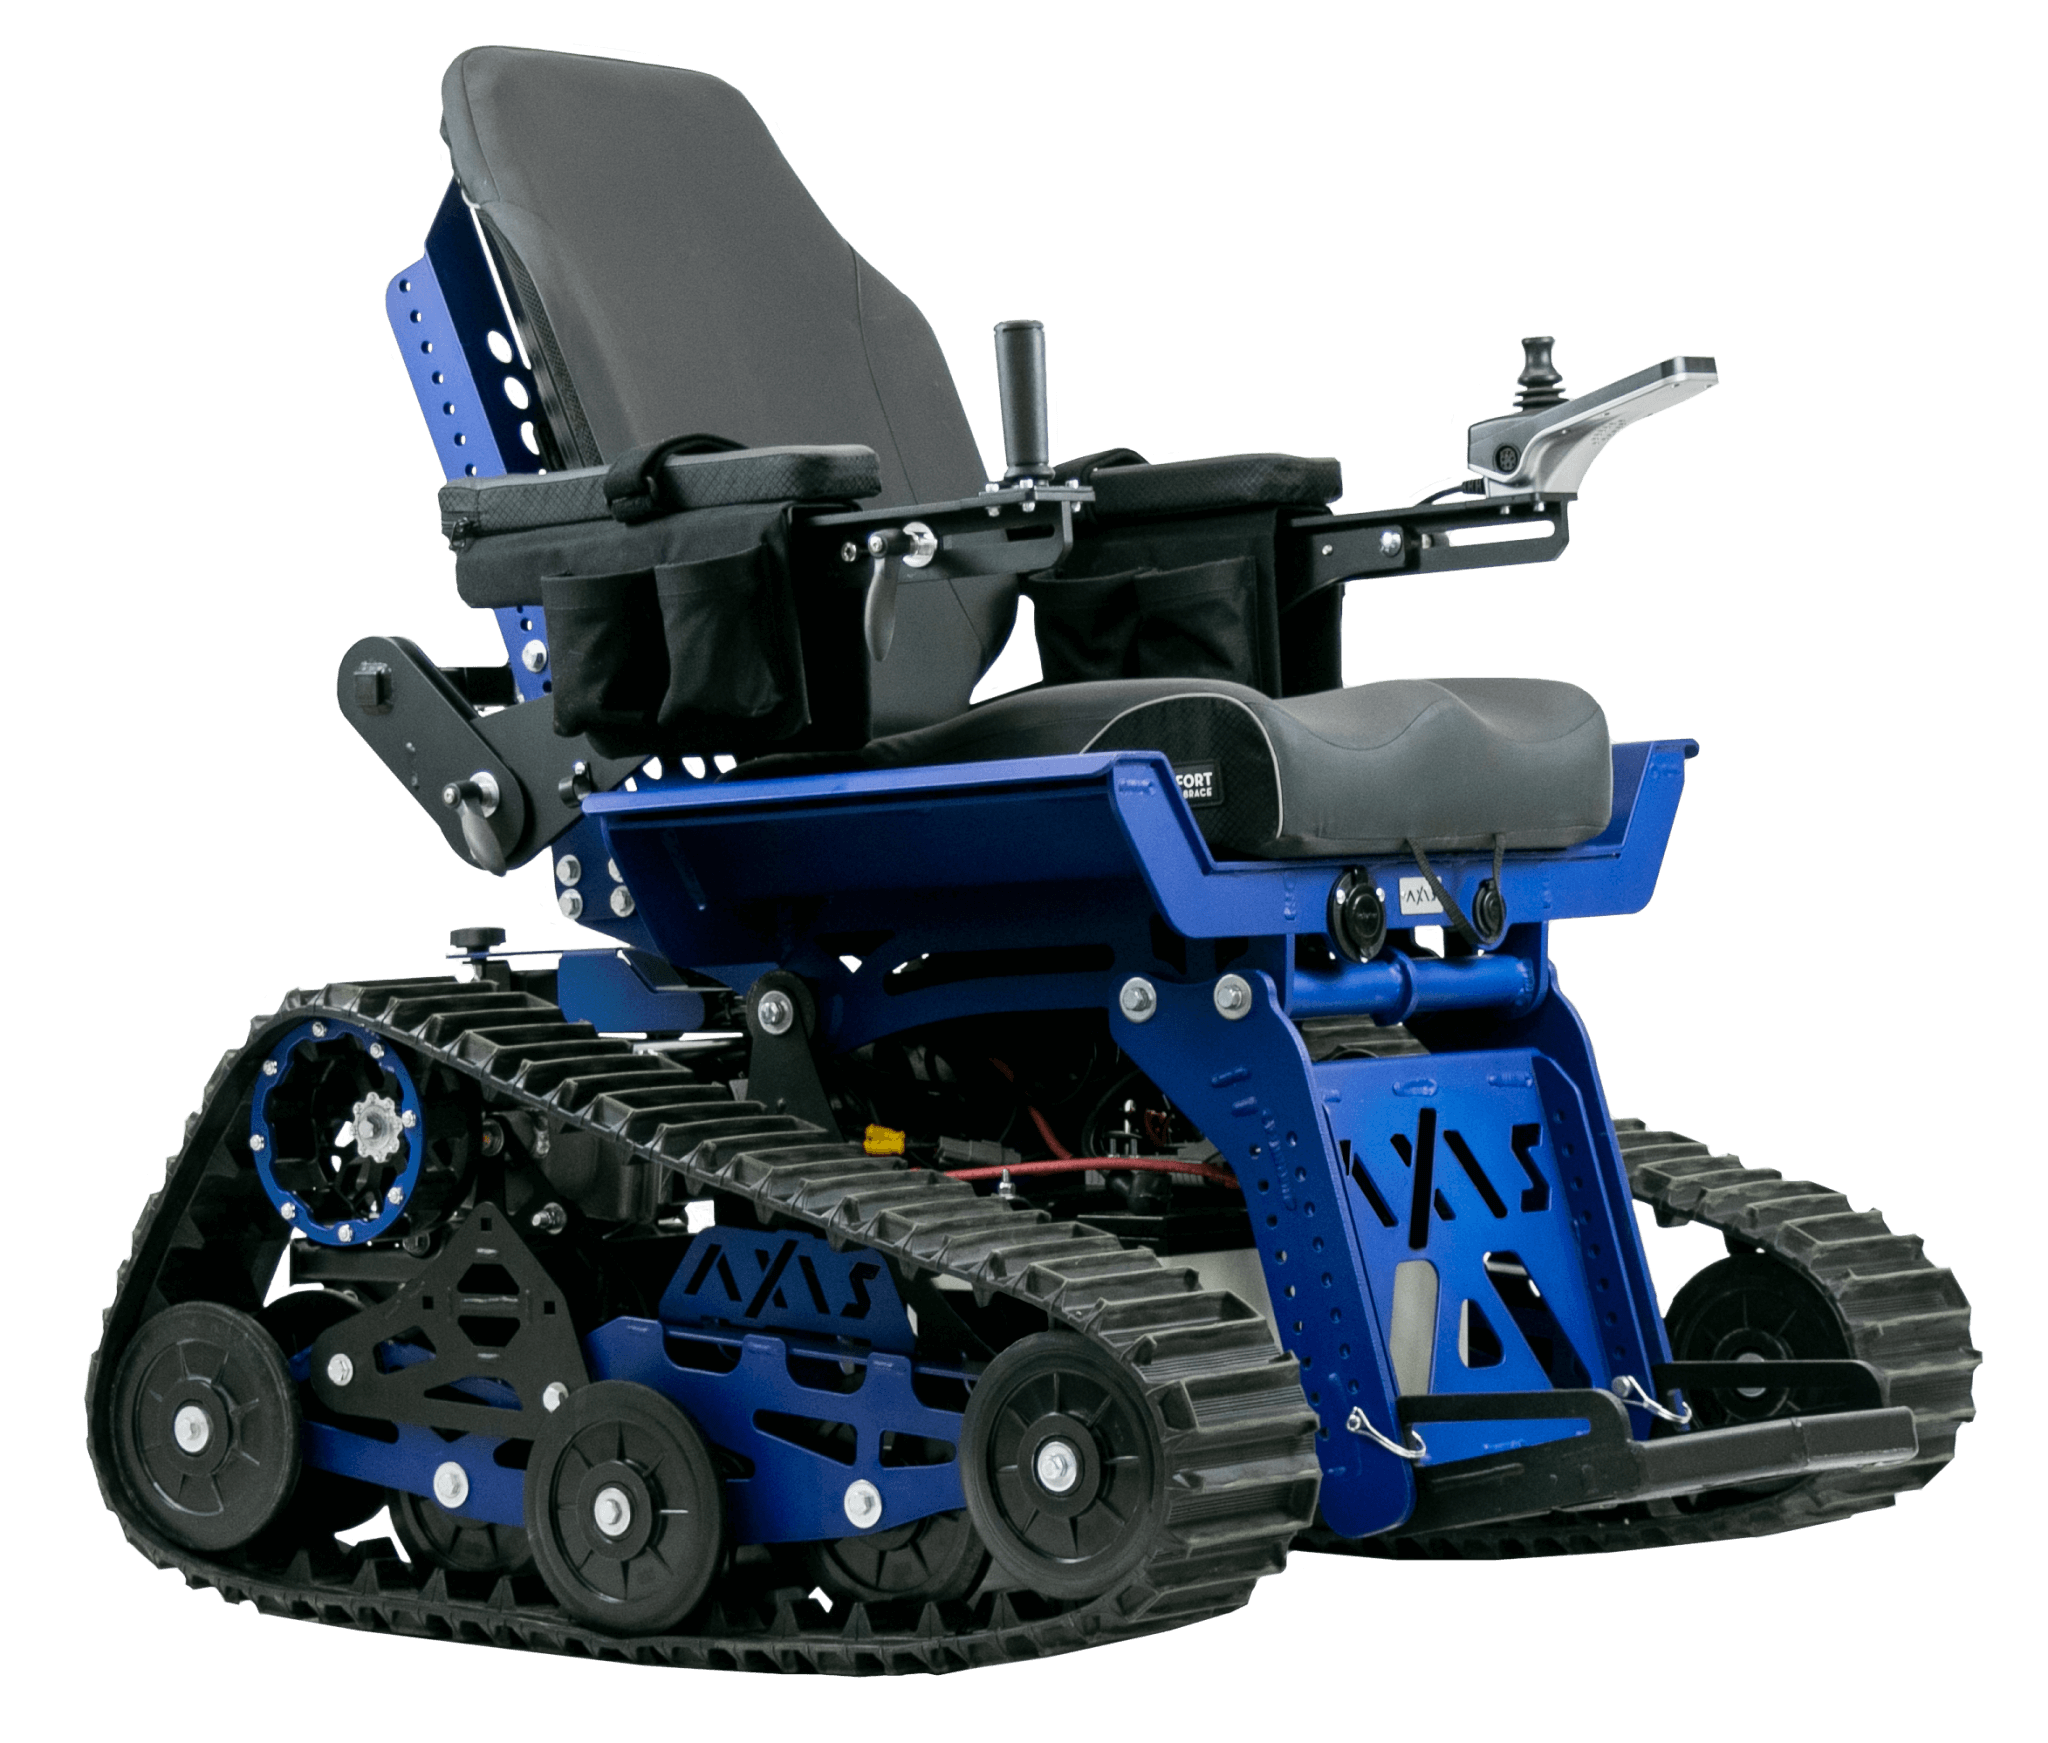 Action Trackchair AXIS All Terrain Wheelchair